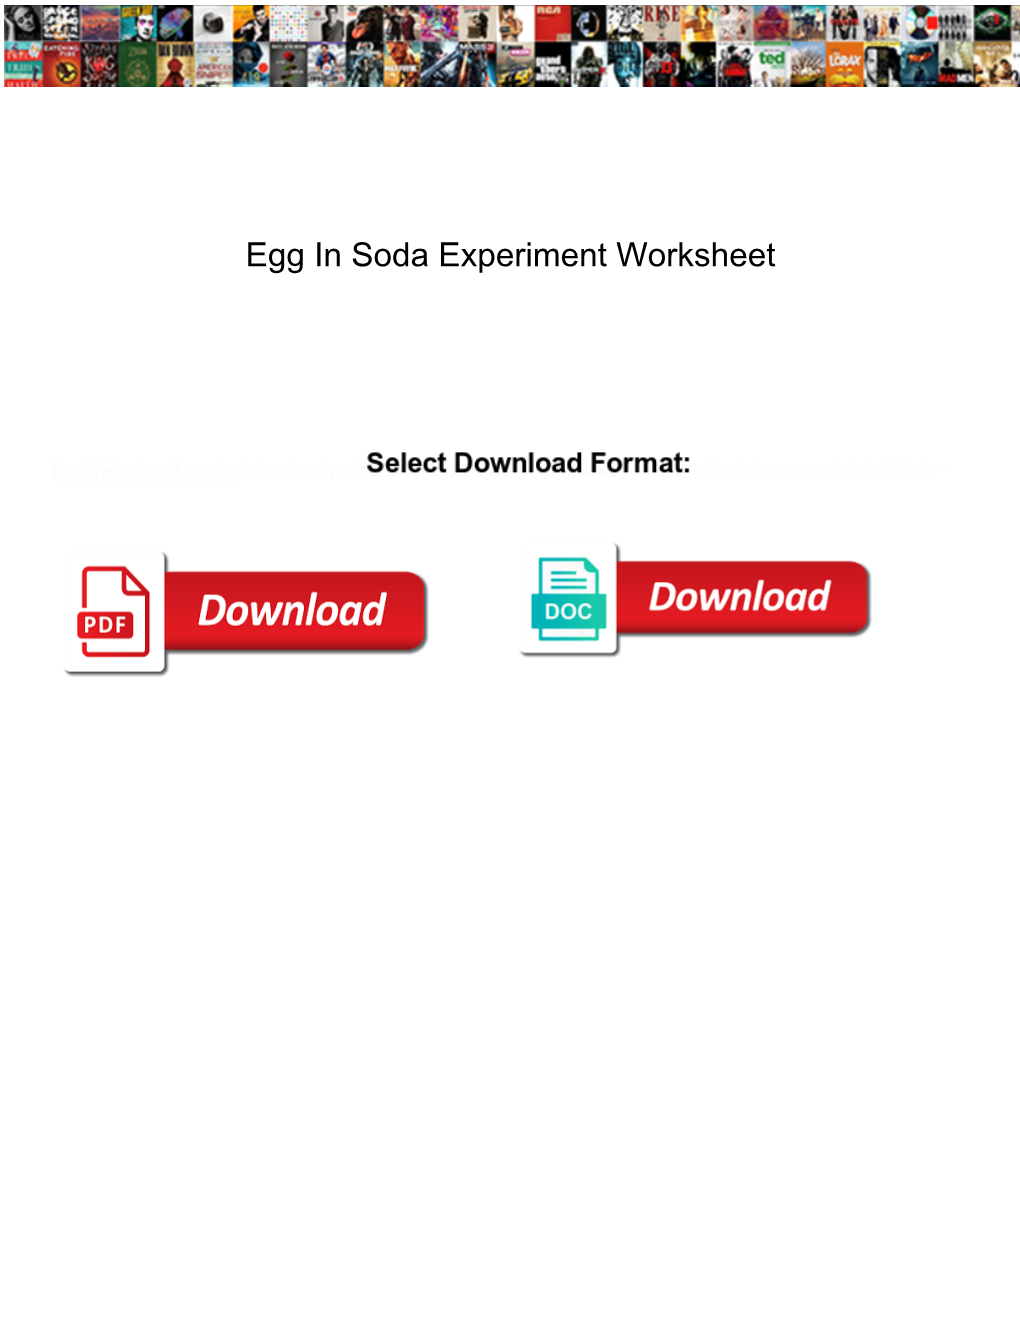 Egg in Soda Experiment Worksheet